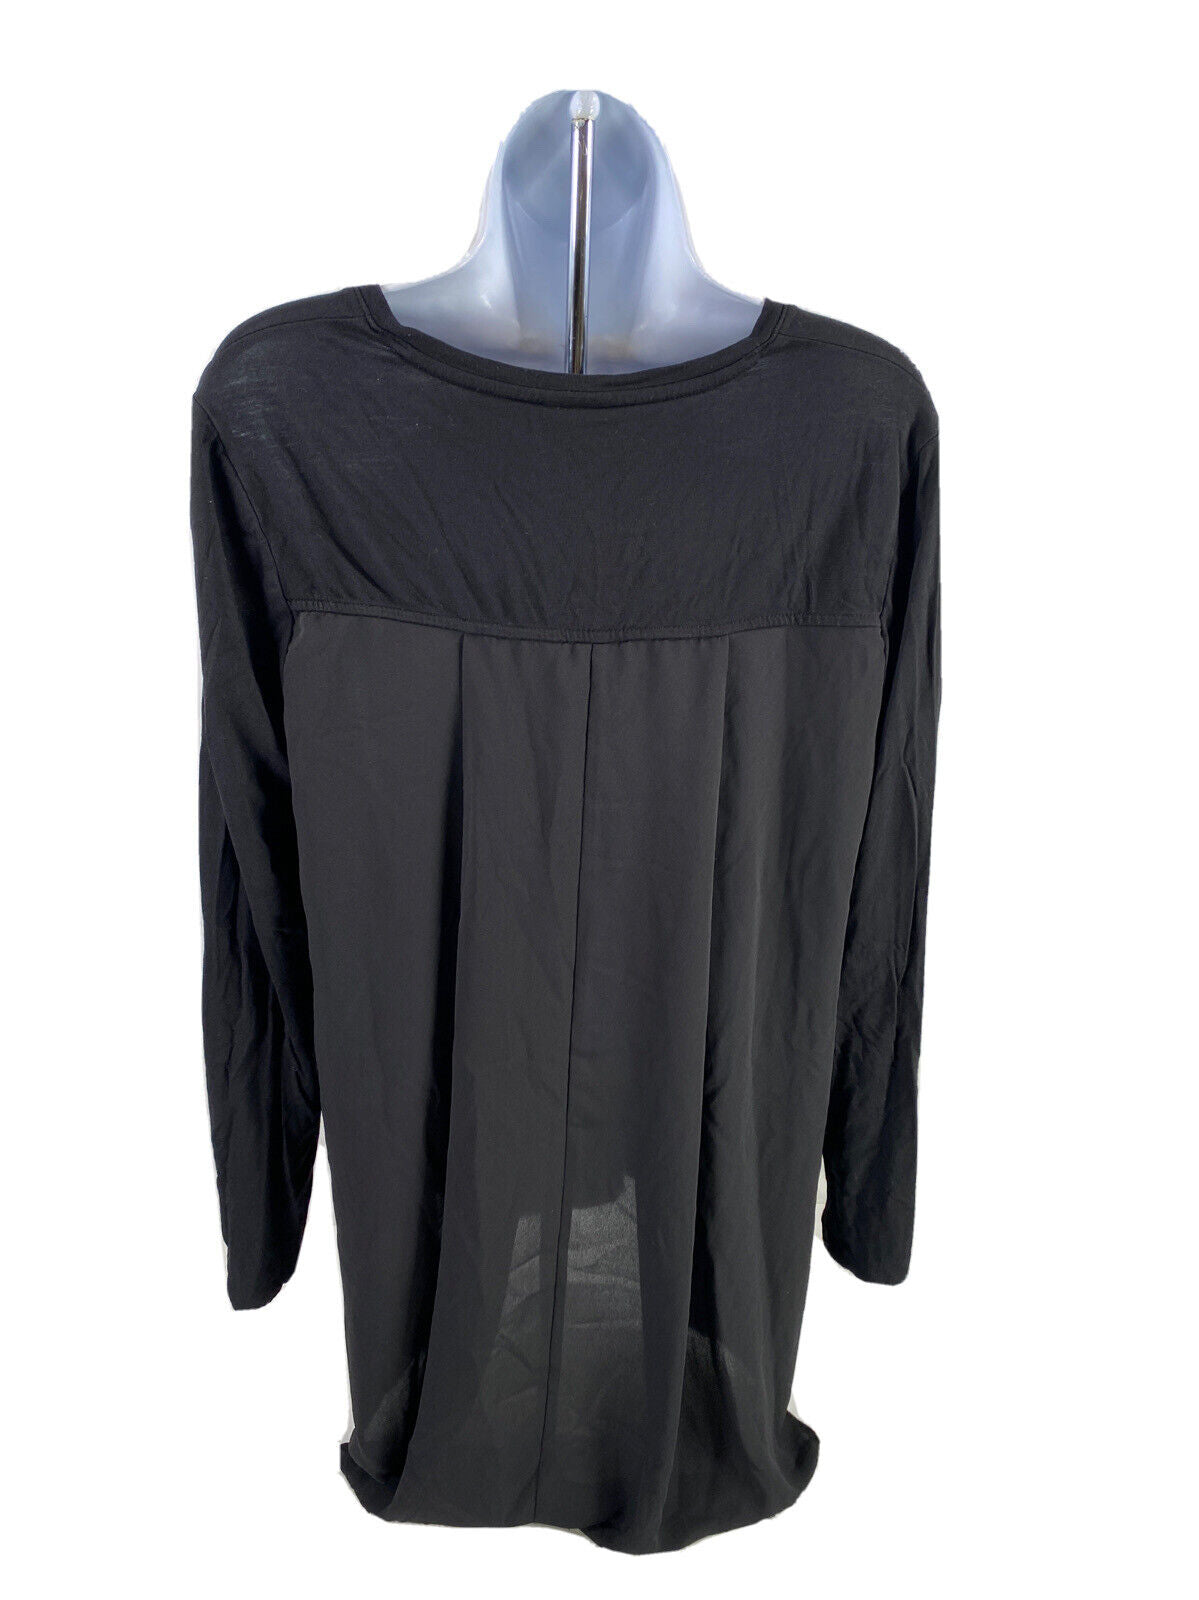 Chico's Blusa tipo túnica de manga larga con espalda tejida negra para mujer - 1 US M